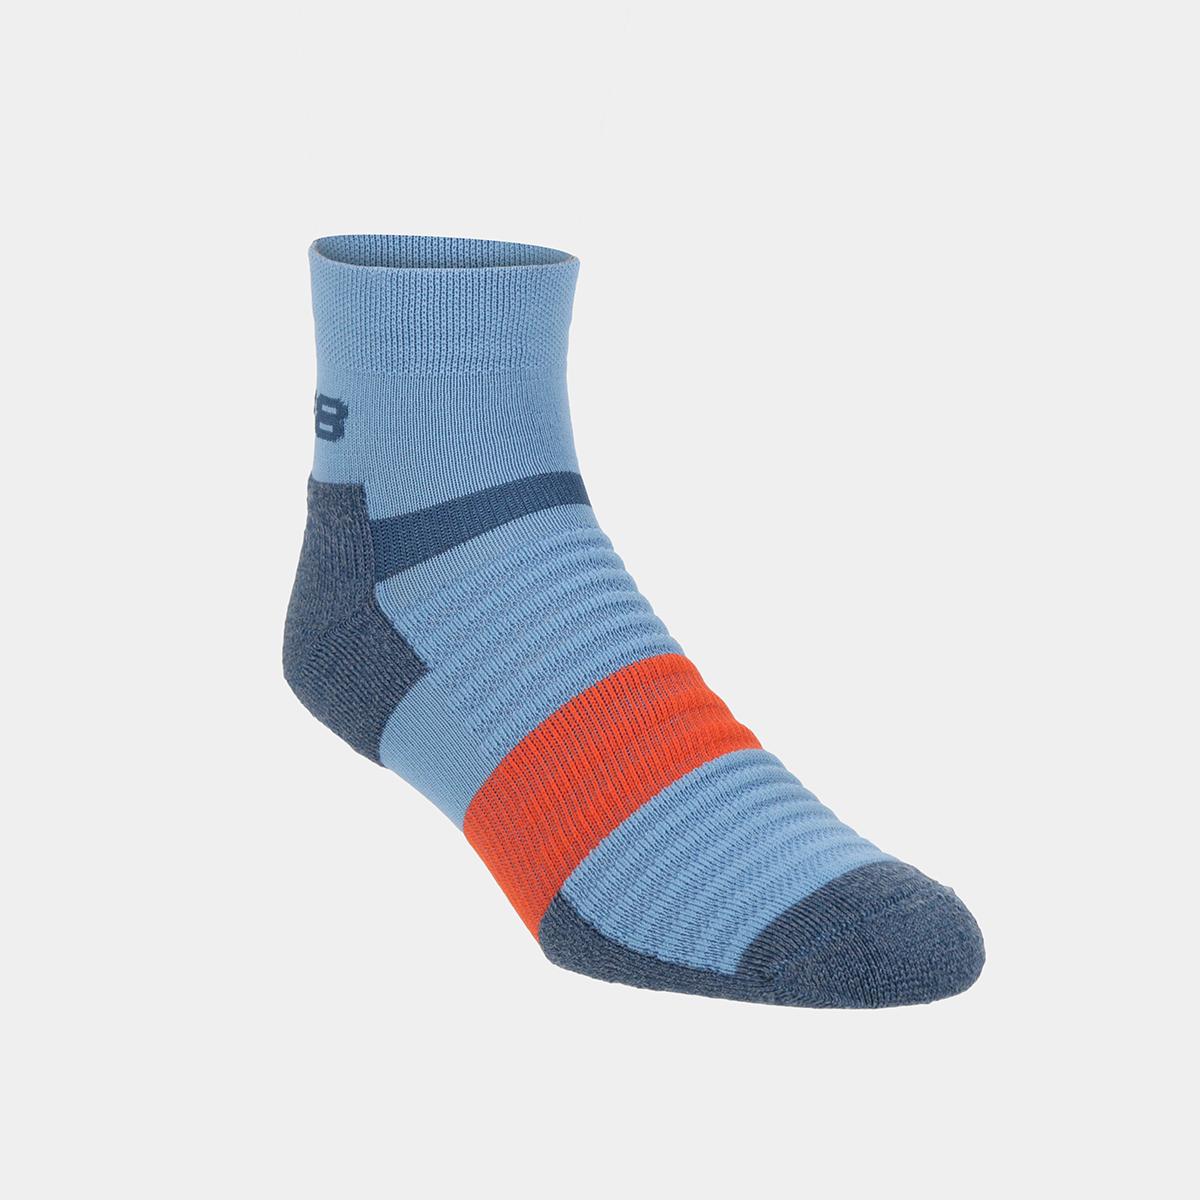 Inov-8 Active Mid Socks - Fiery Red / Blue Grey